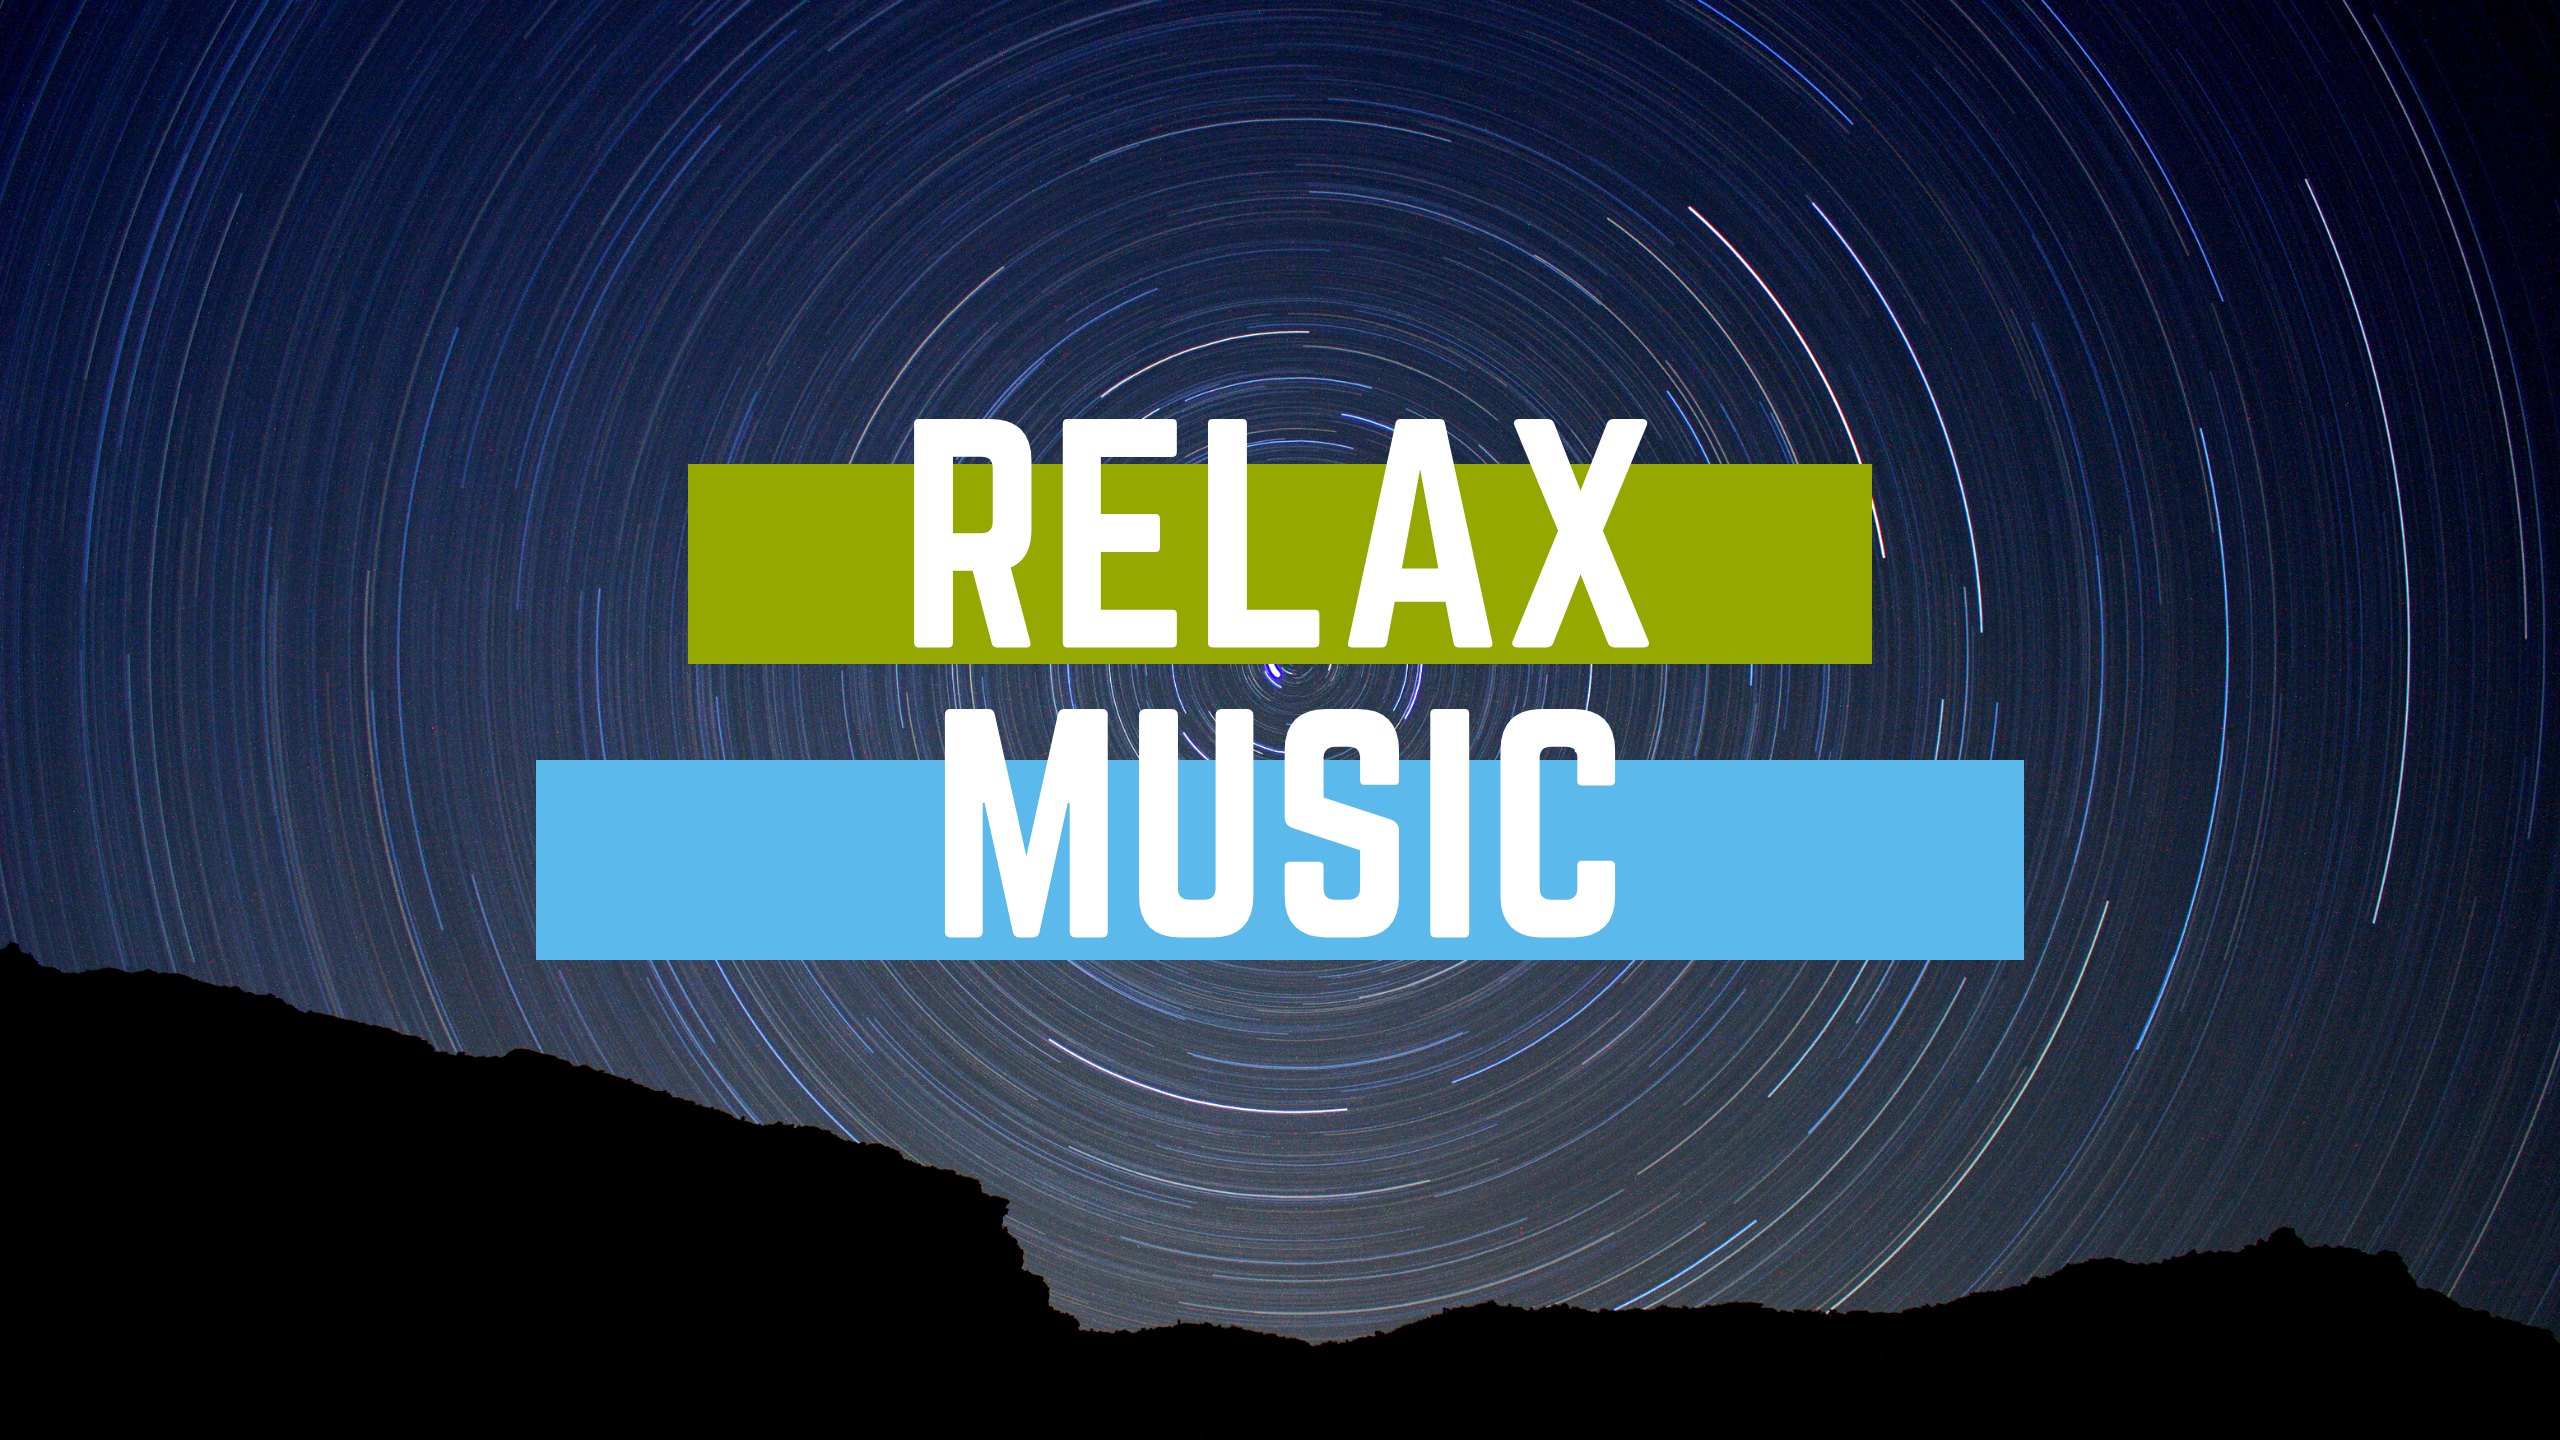 Relax music